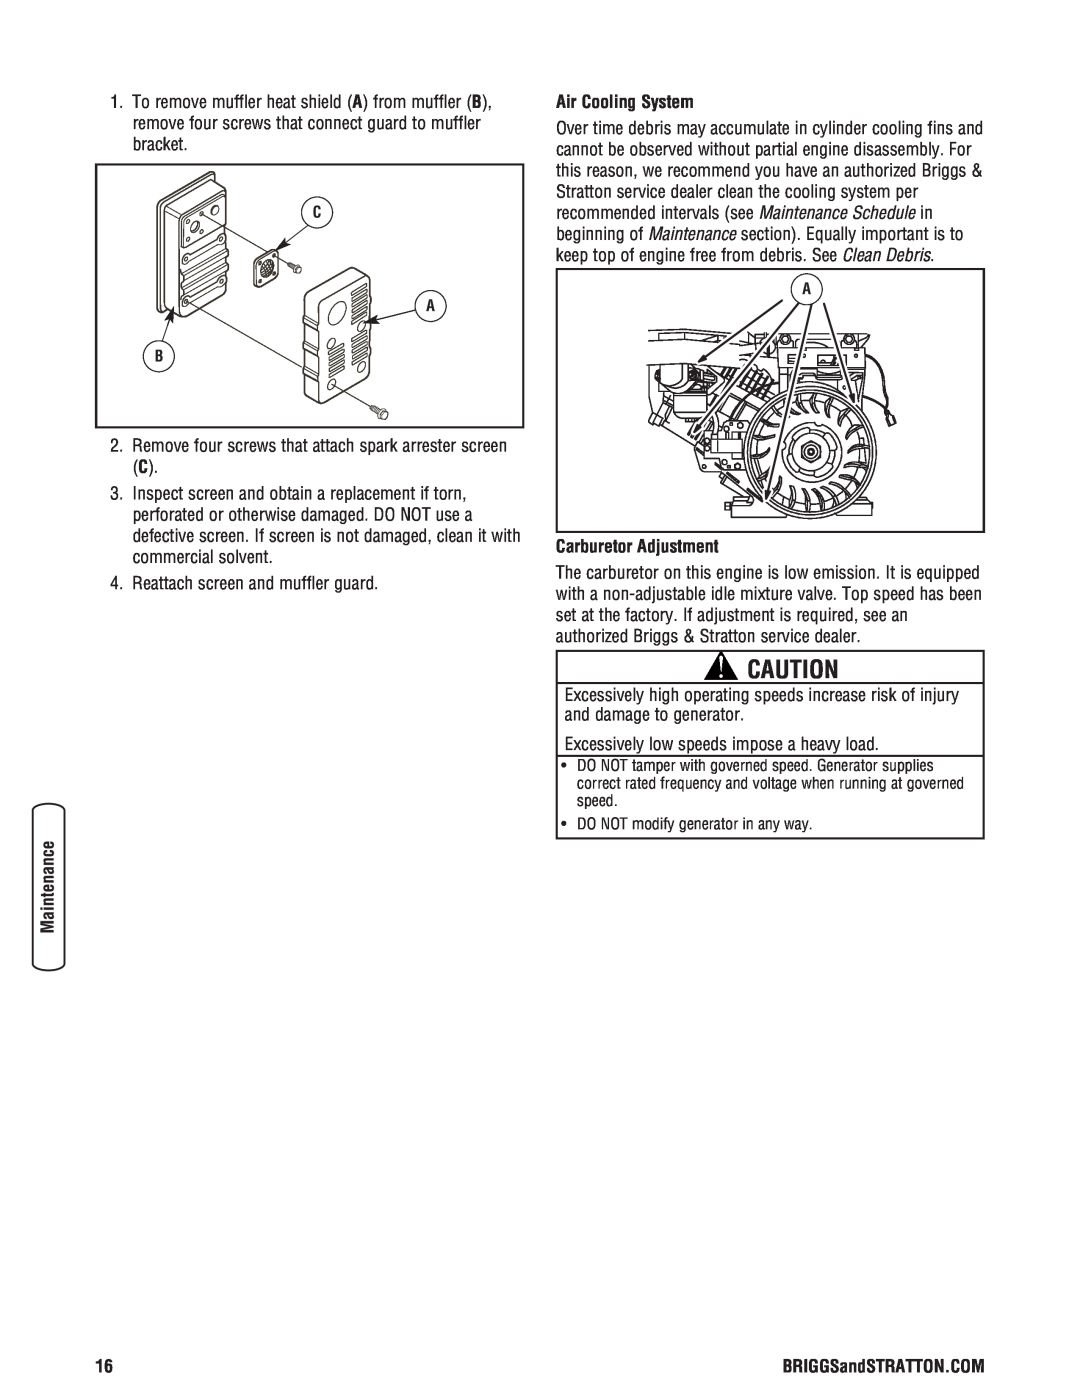 Briggs & Stratton 30348 manual Air Cooling System, Carburetor Adjustment 